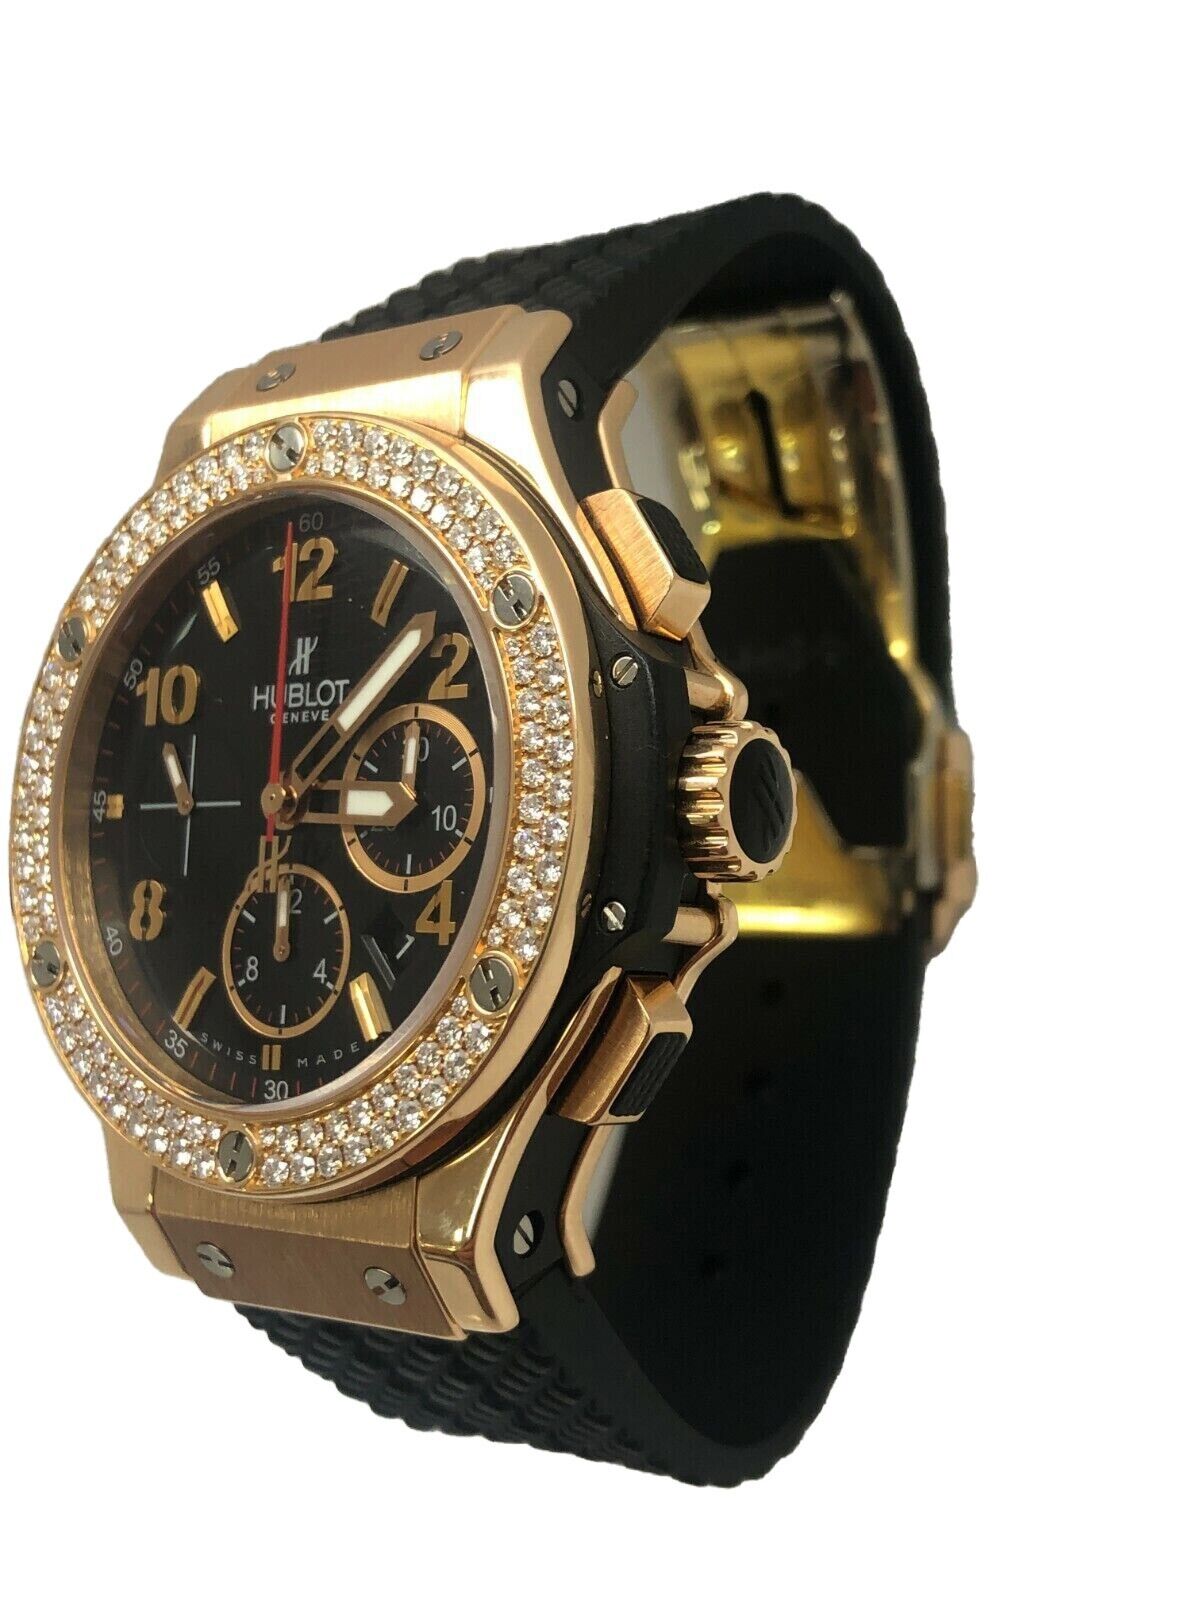 Hubolt Big Bang 301 Diamond Bezel 18k Gold Men's Watch